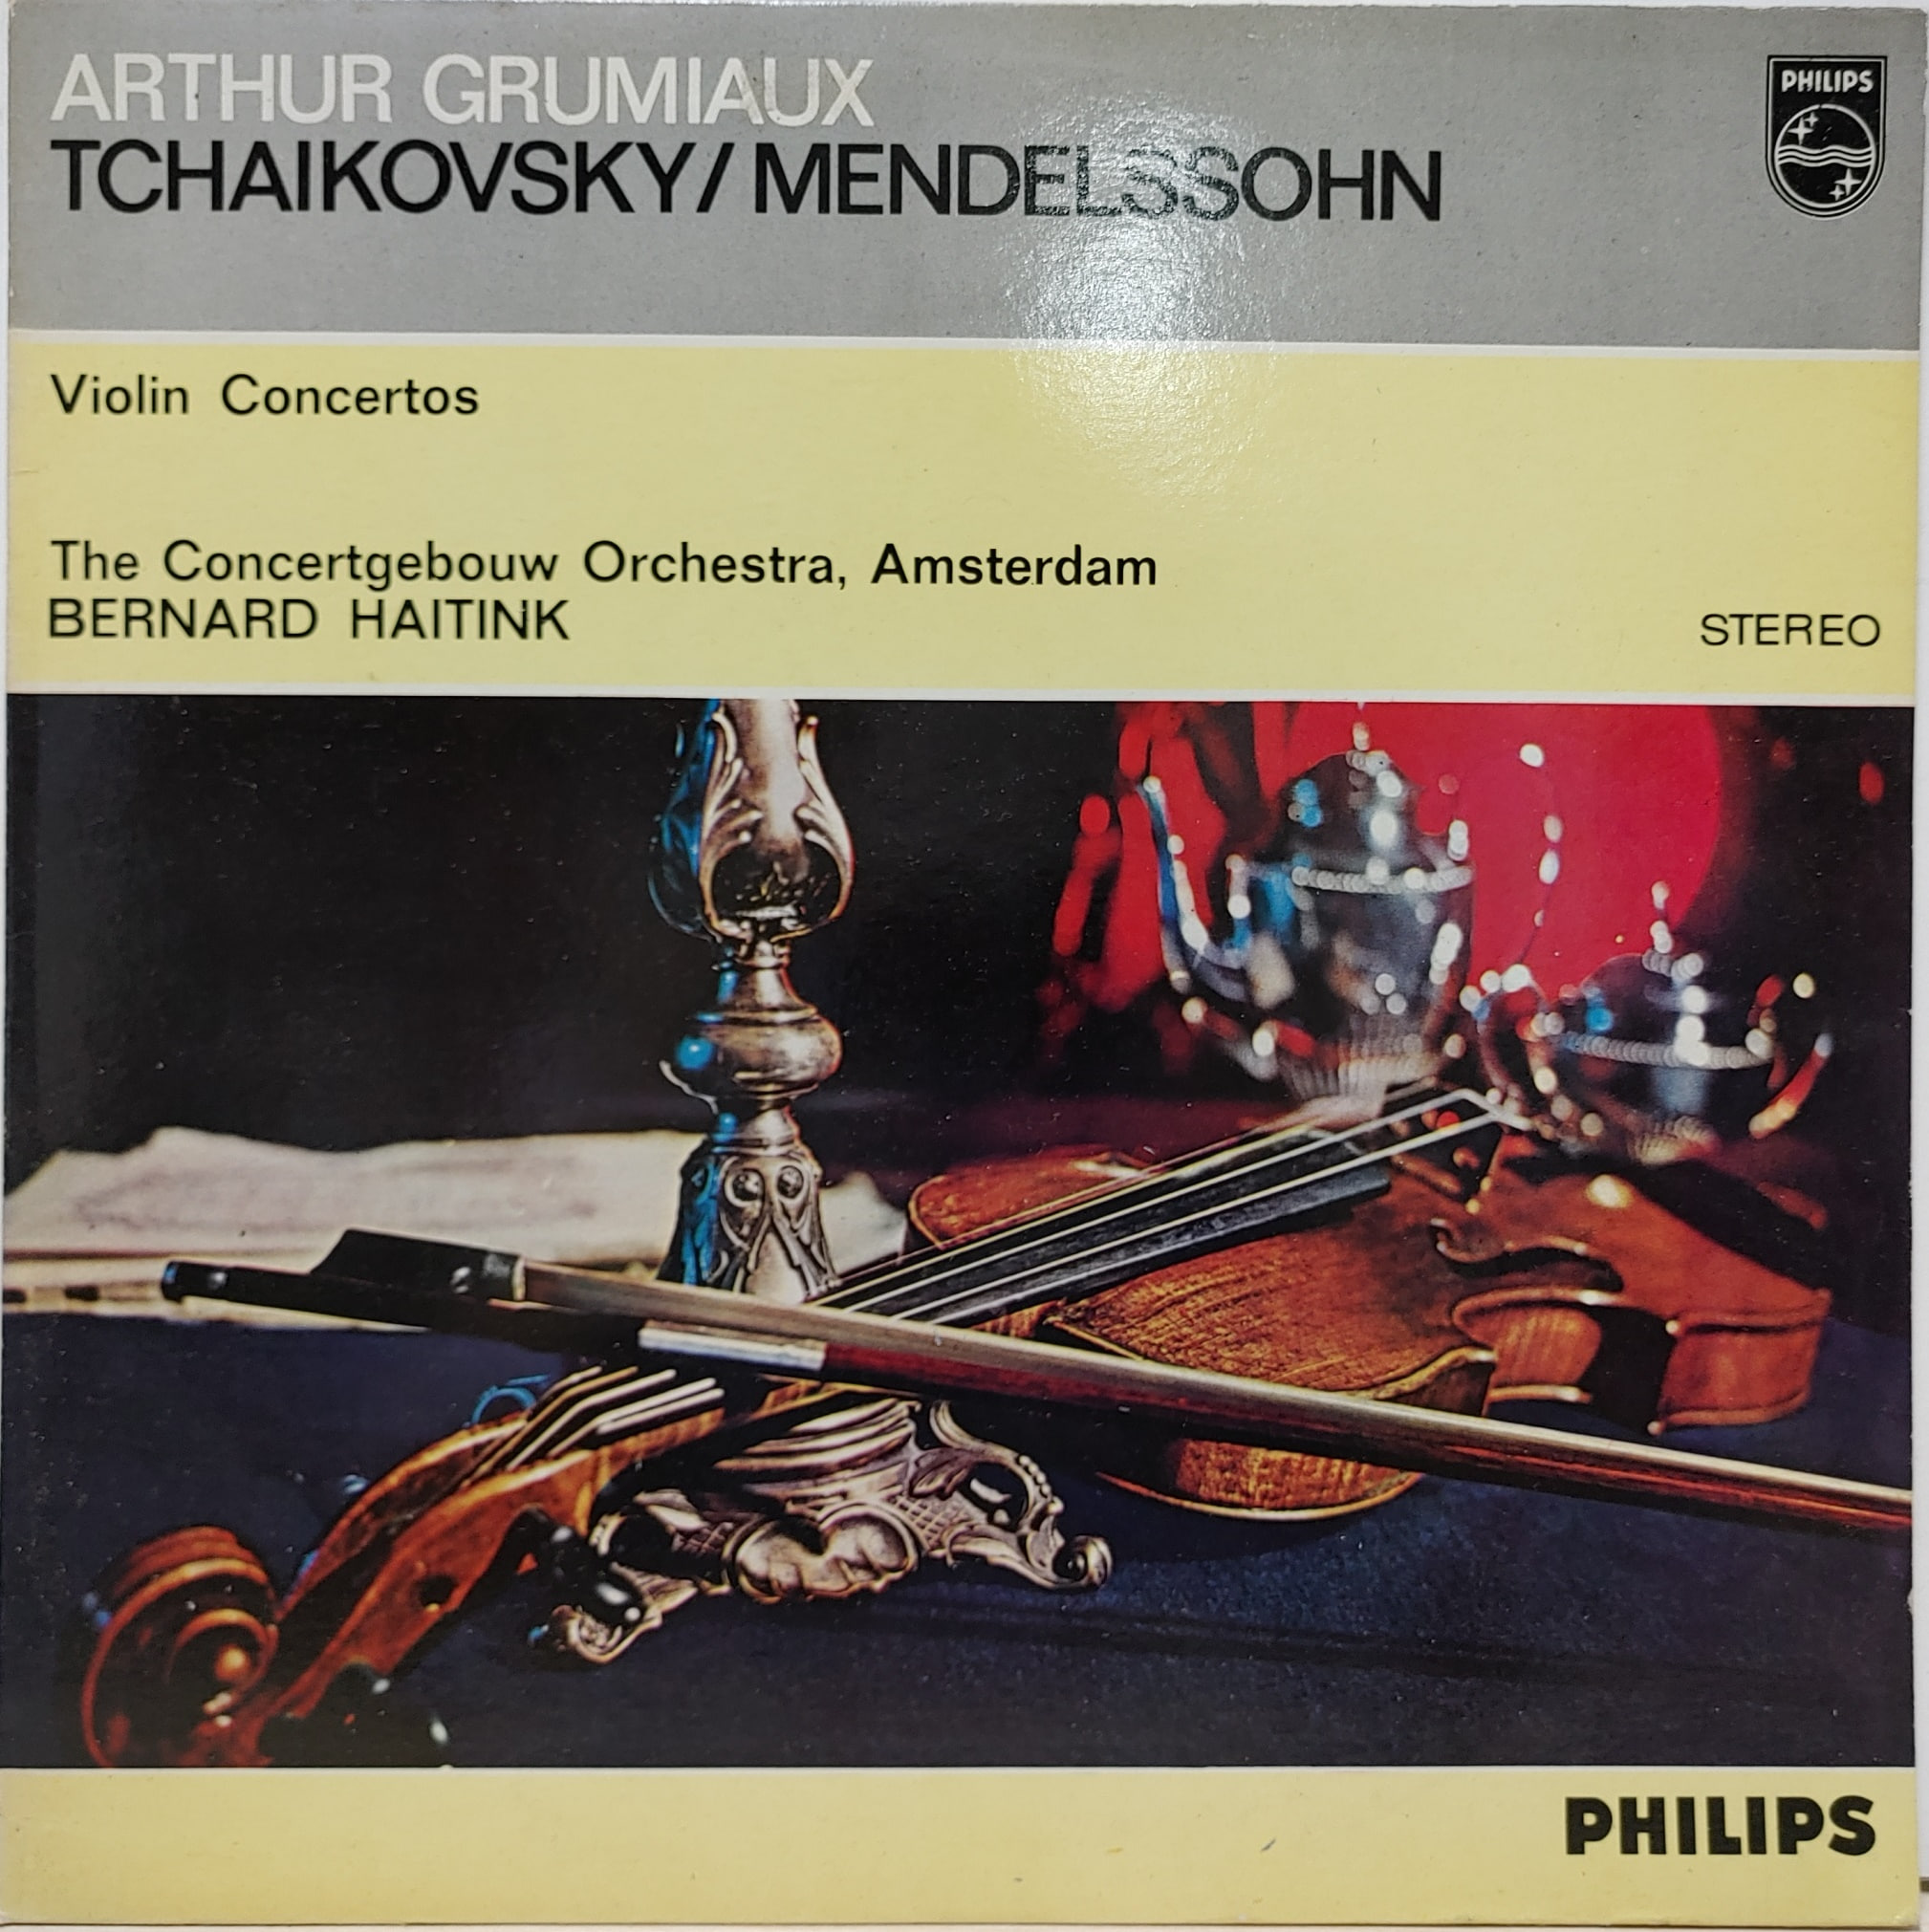 Arthur Grumiaux / Tchaikovsky Mendel BERNARD HAITINK